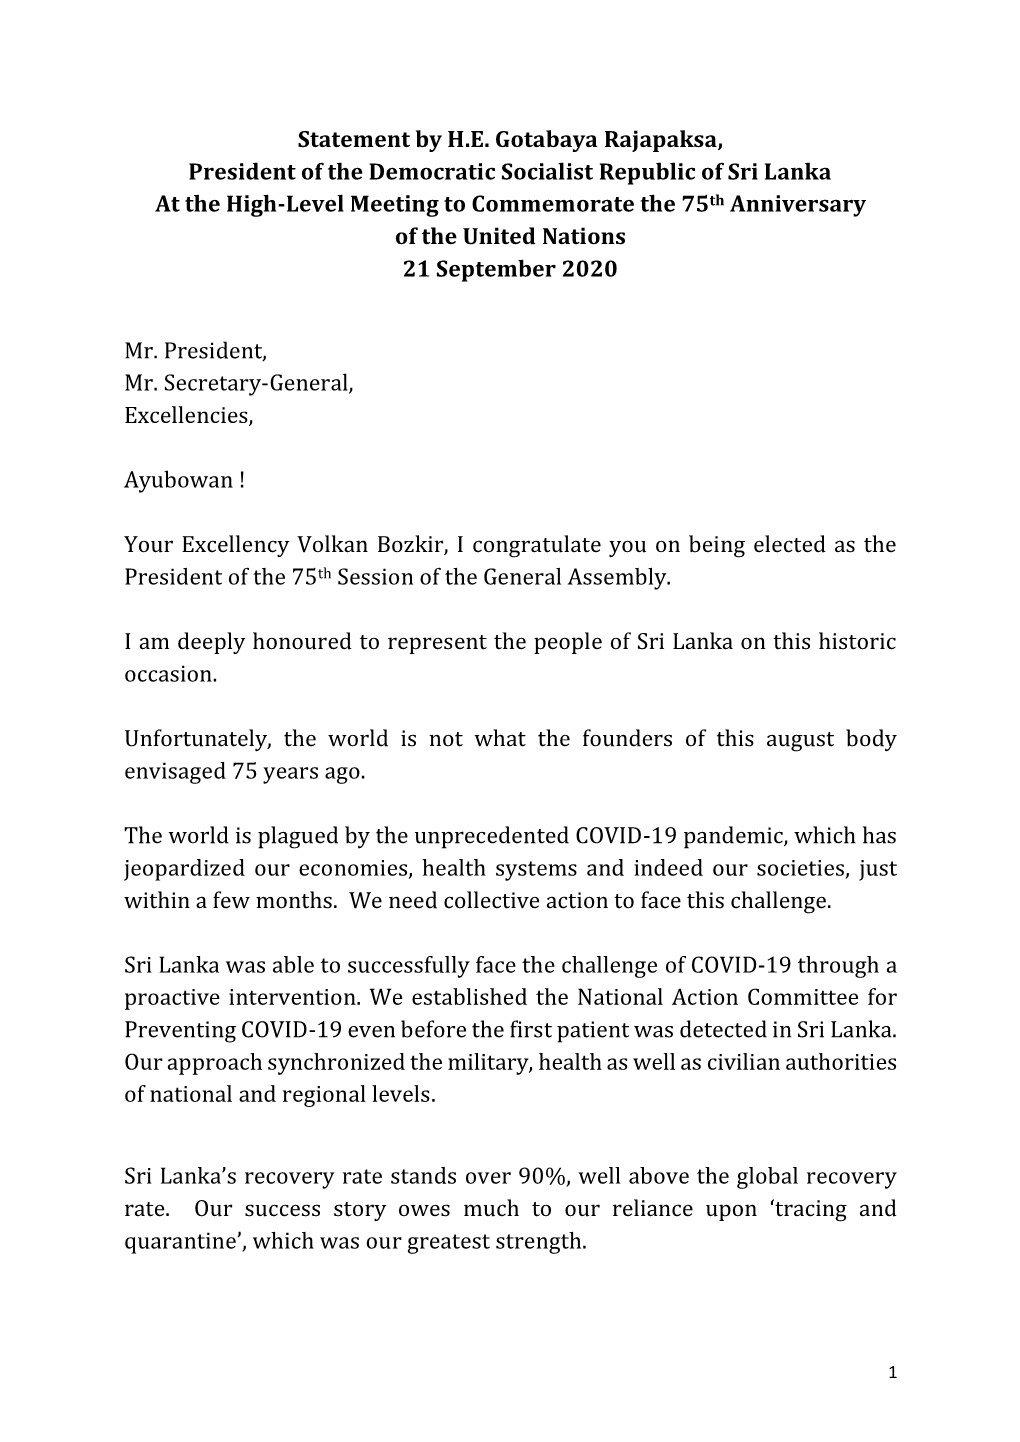 Statement by H.E. Gotabaya Rajapaksa, President of The